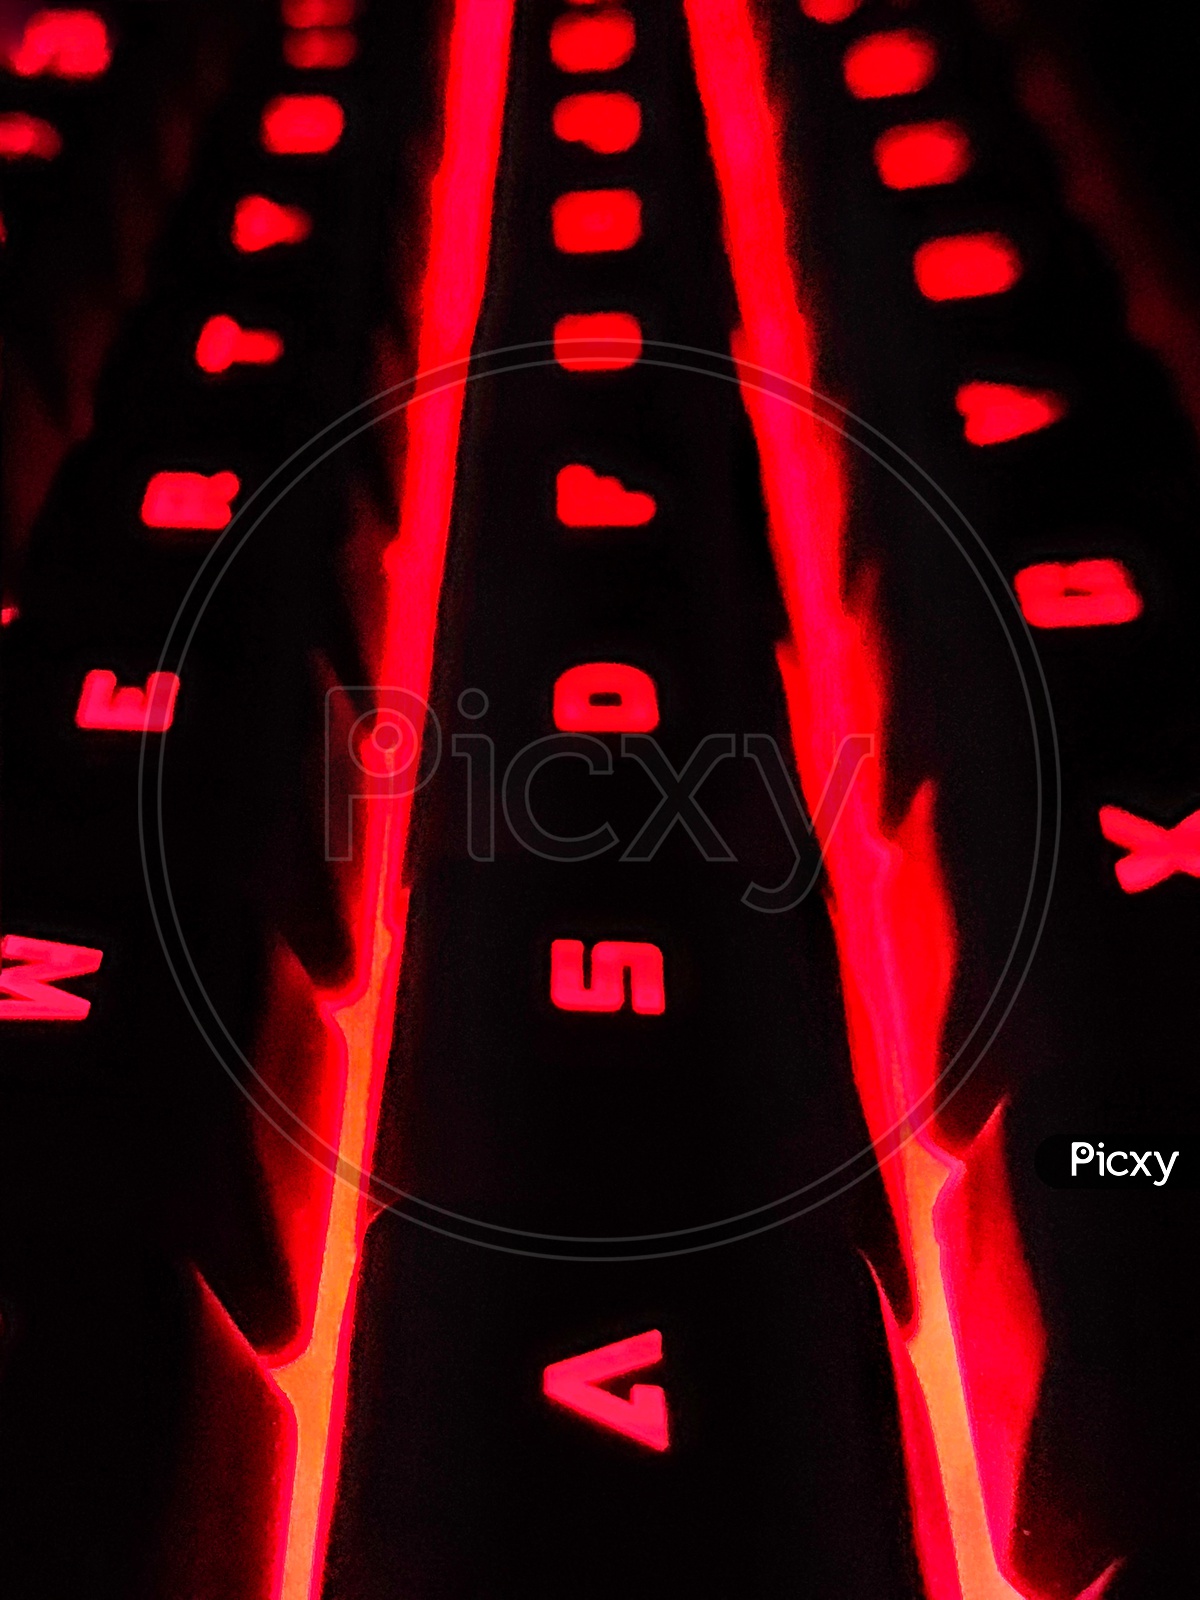 Macro shot of a keyboard